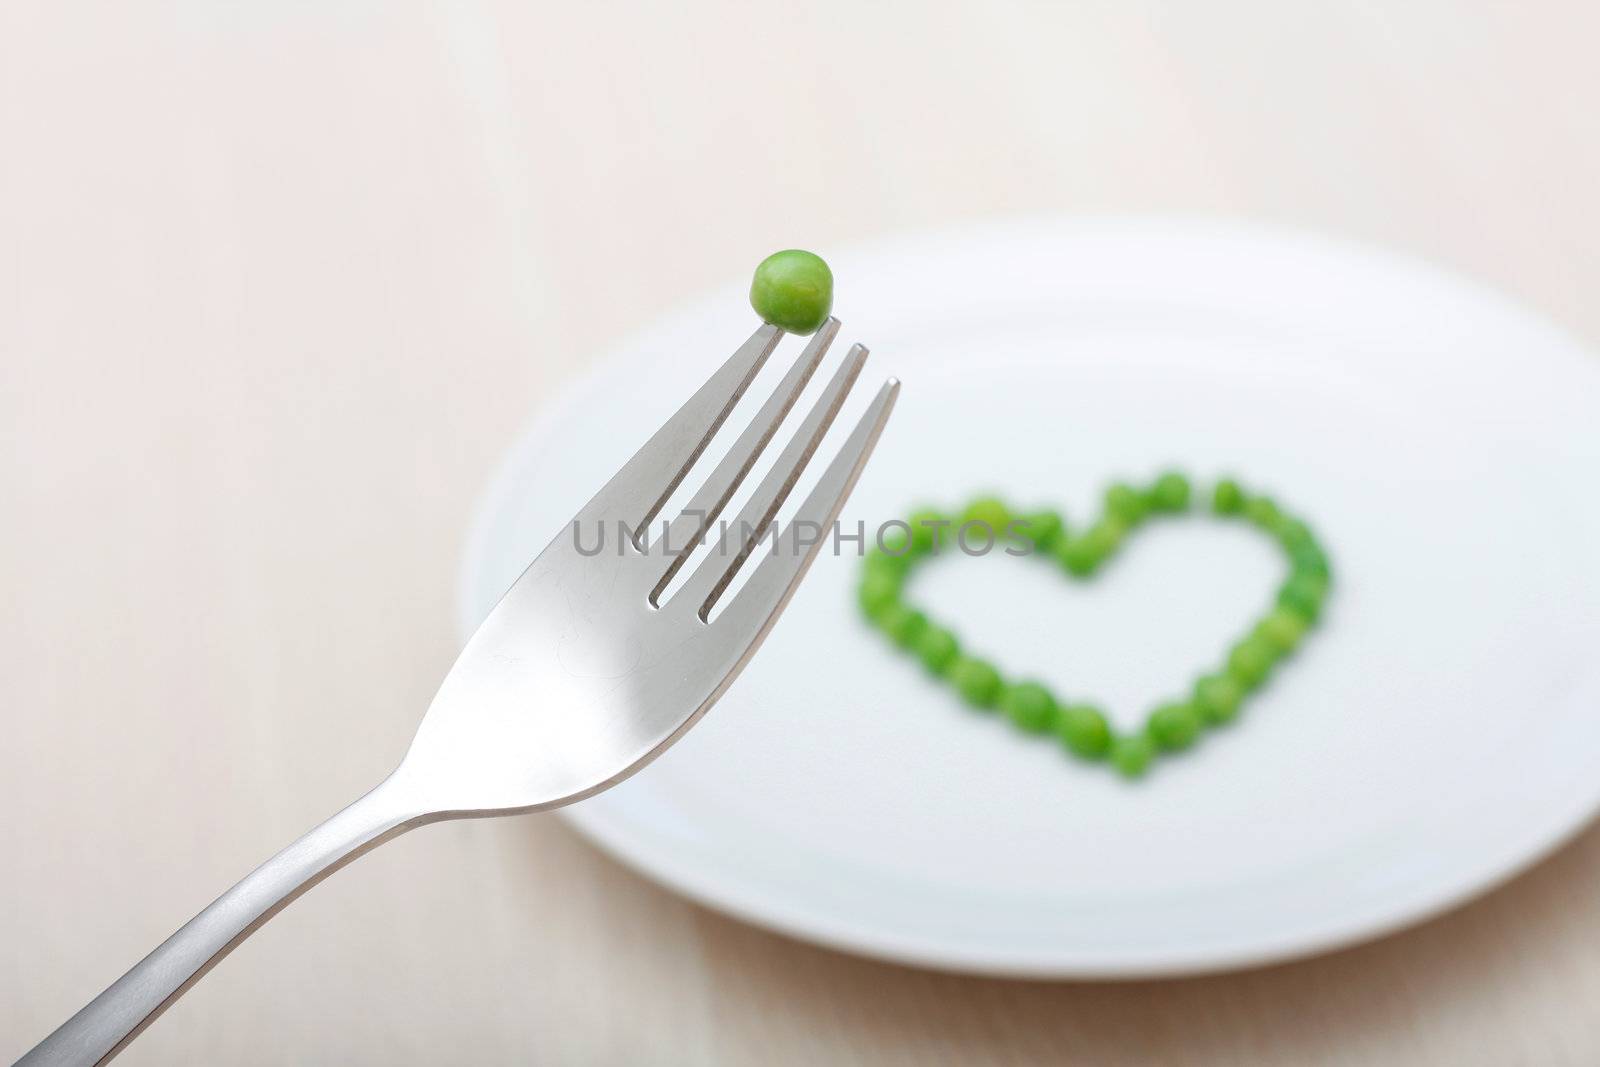 Heartshaped peas on a plate